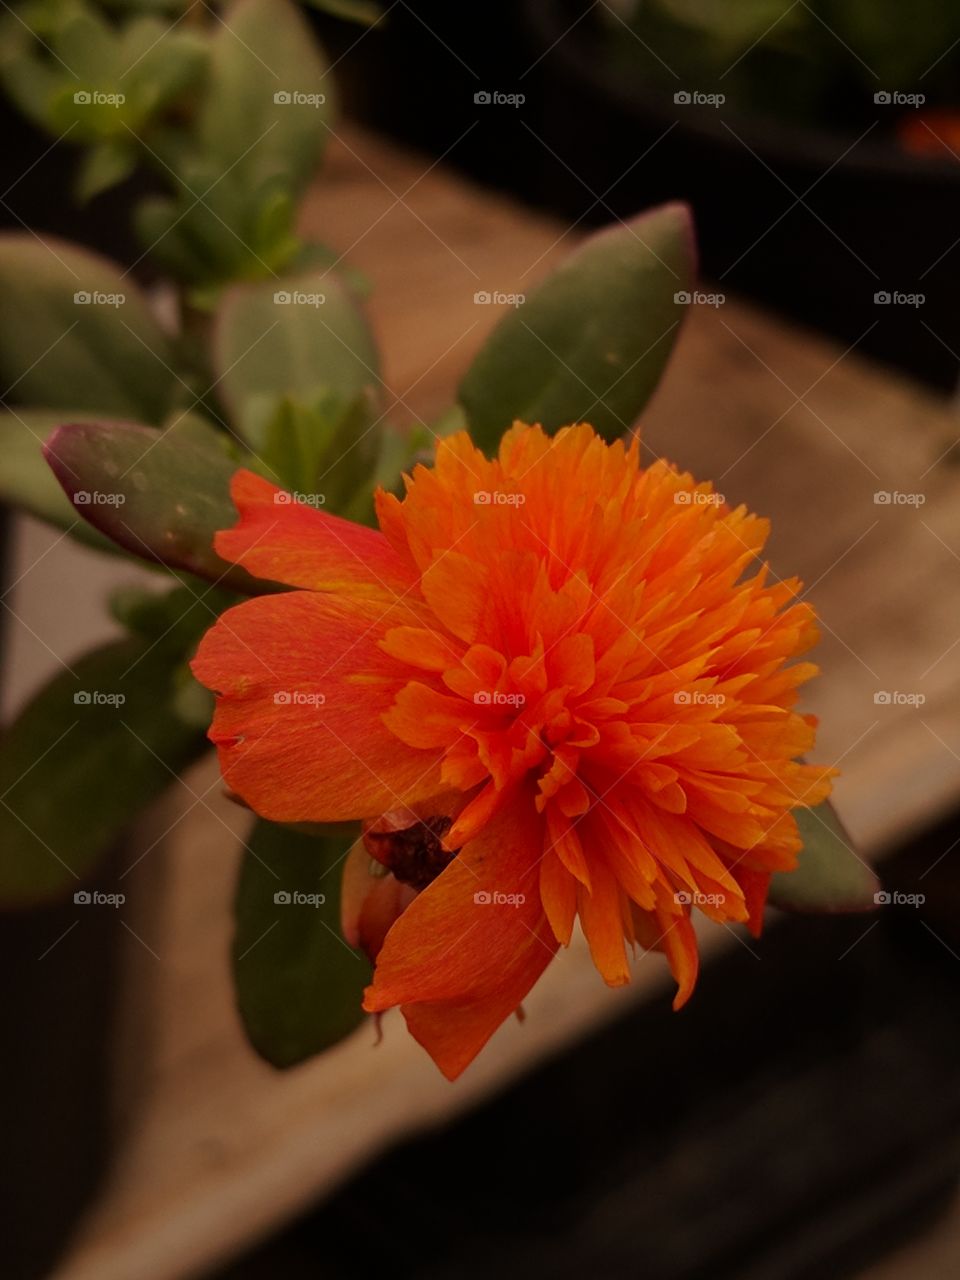 fire orange flower